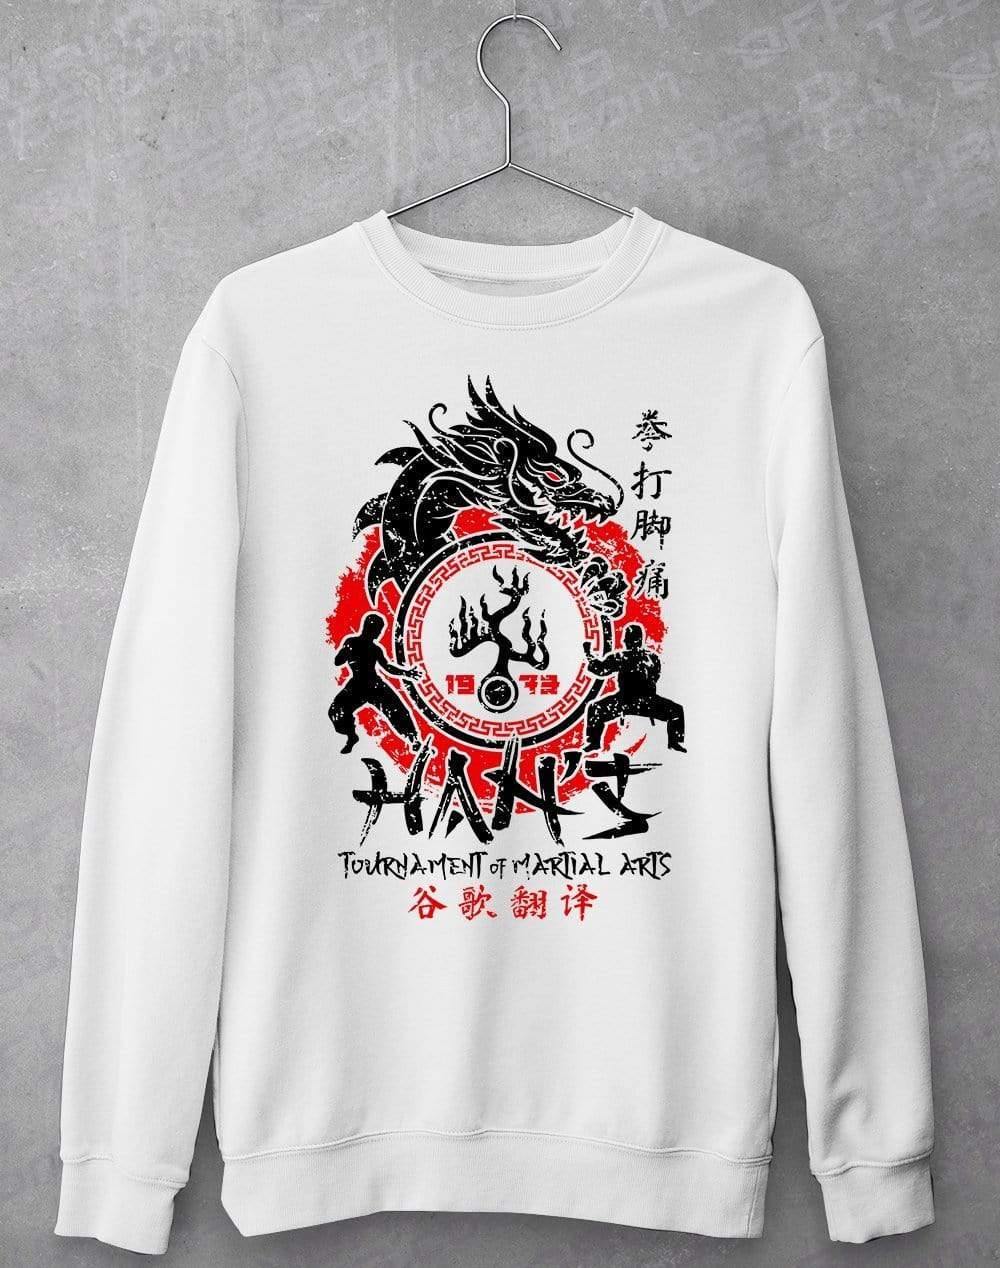 Han's Tournament of Martial Arts Sweatshirt XS / Arctic White  - Off World Tees